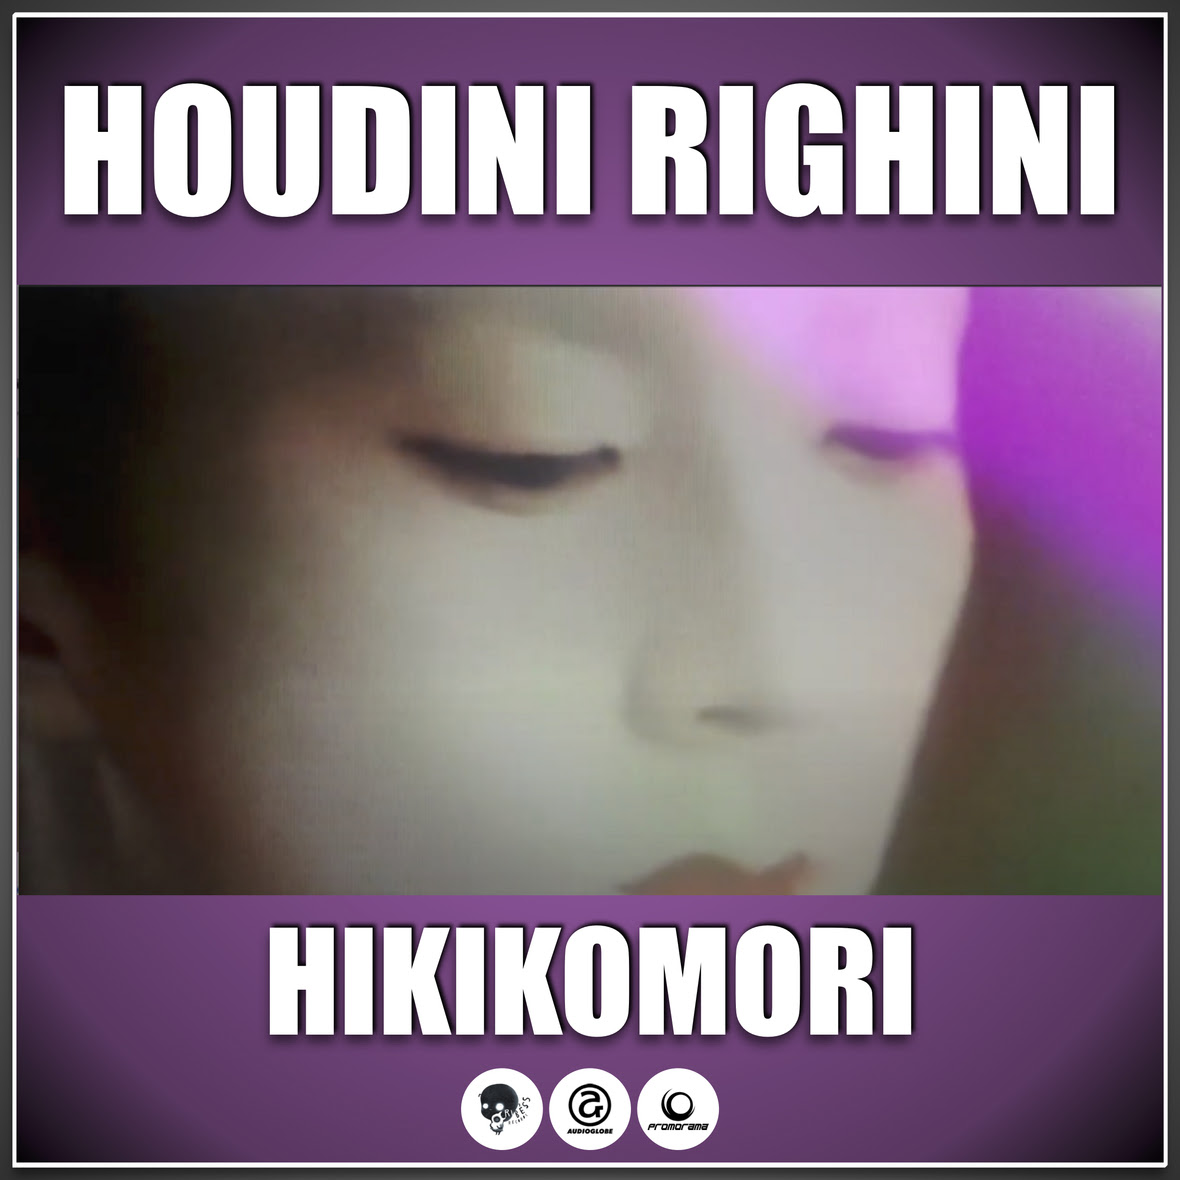 Houdini Righini - Hikikomori